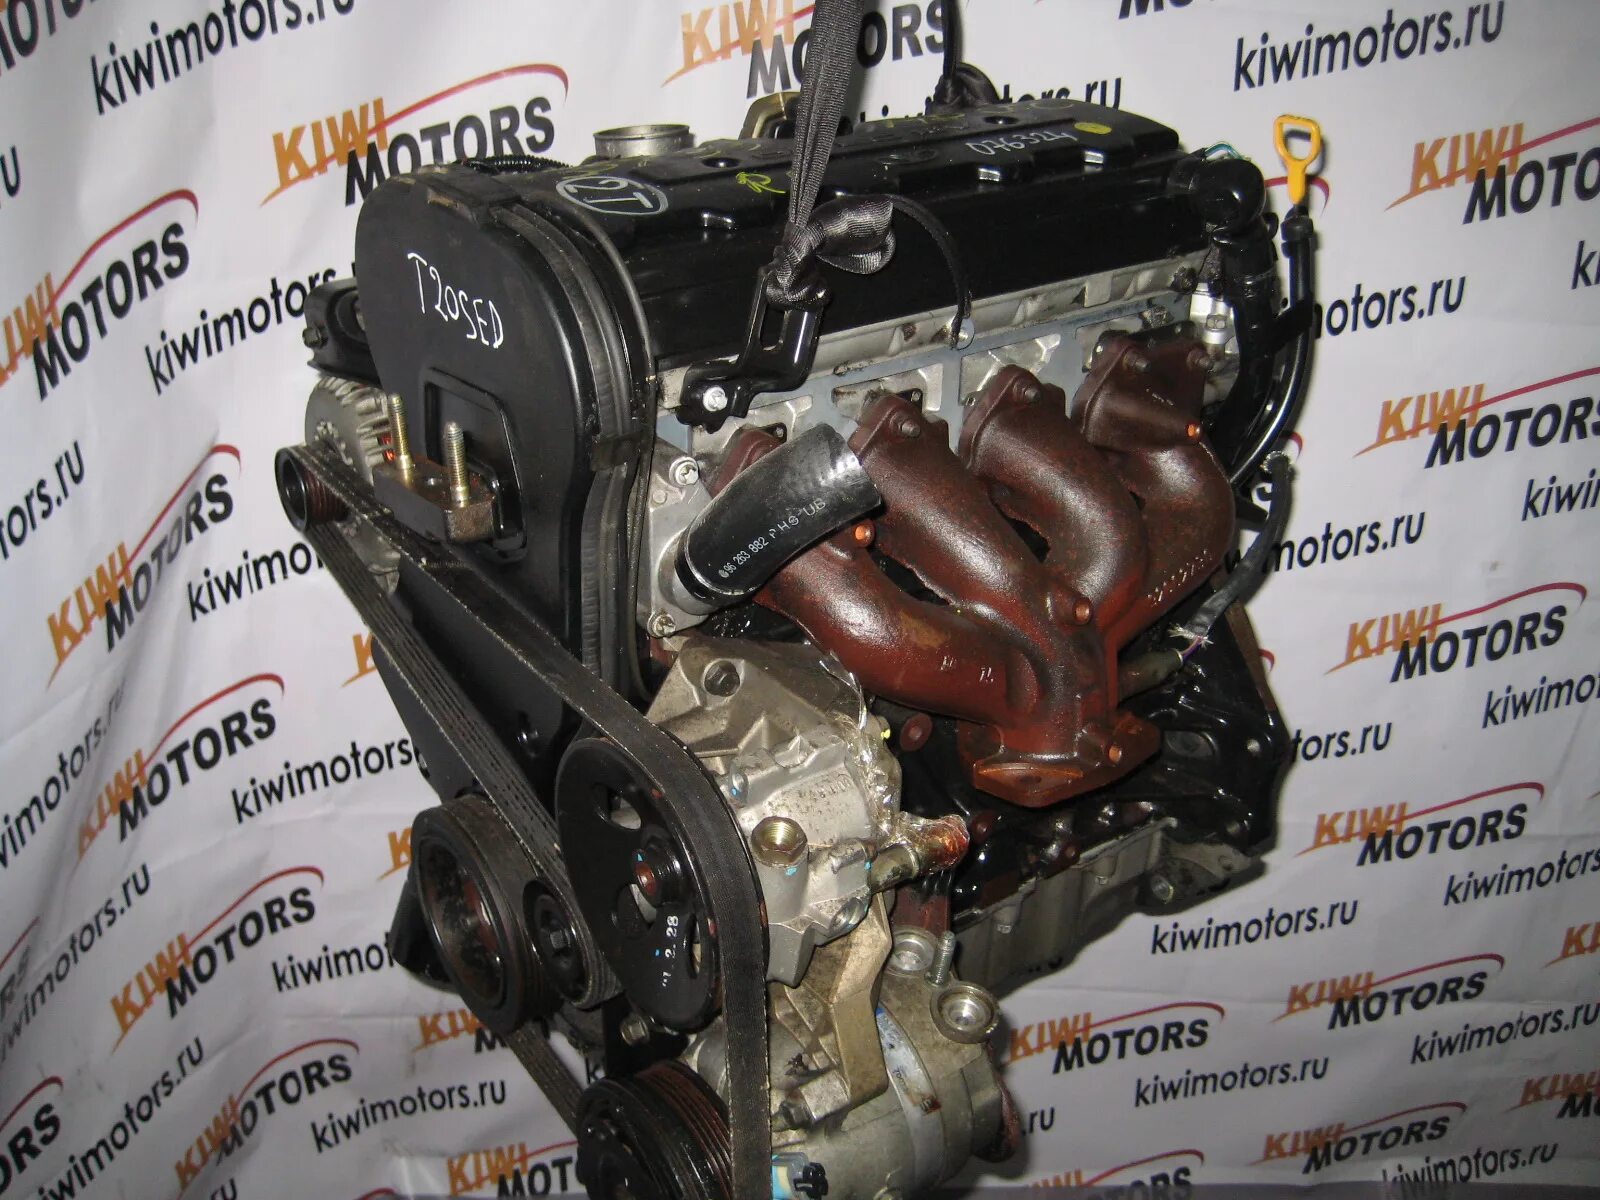 Мотор Шевроле Эванда 2.0. Двигатель Дэу Леганза 2.0. Двигатель Daewoo Nubira 2.0. Дэу Реззо 2.0 двигатель. Двигатели б у шевроле